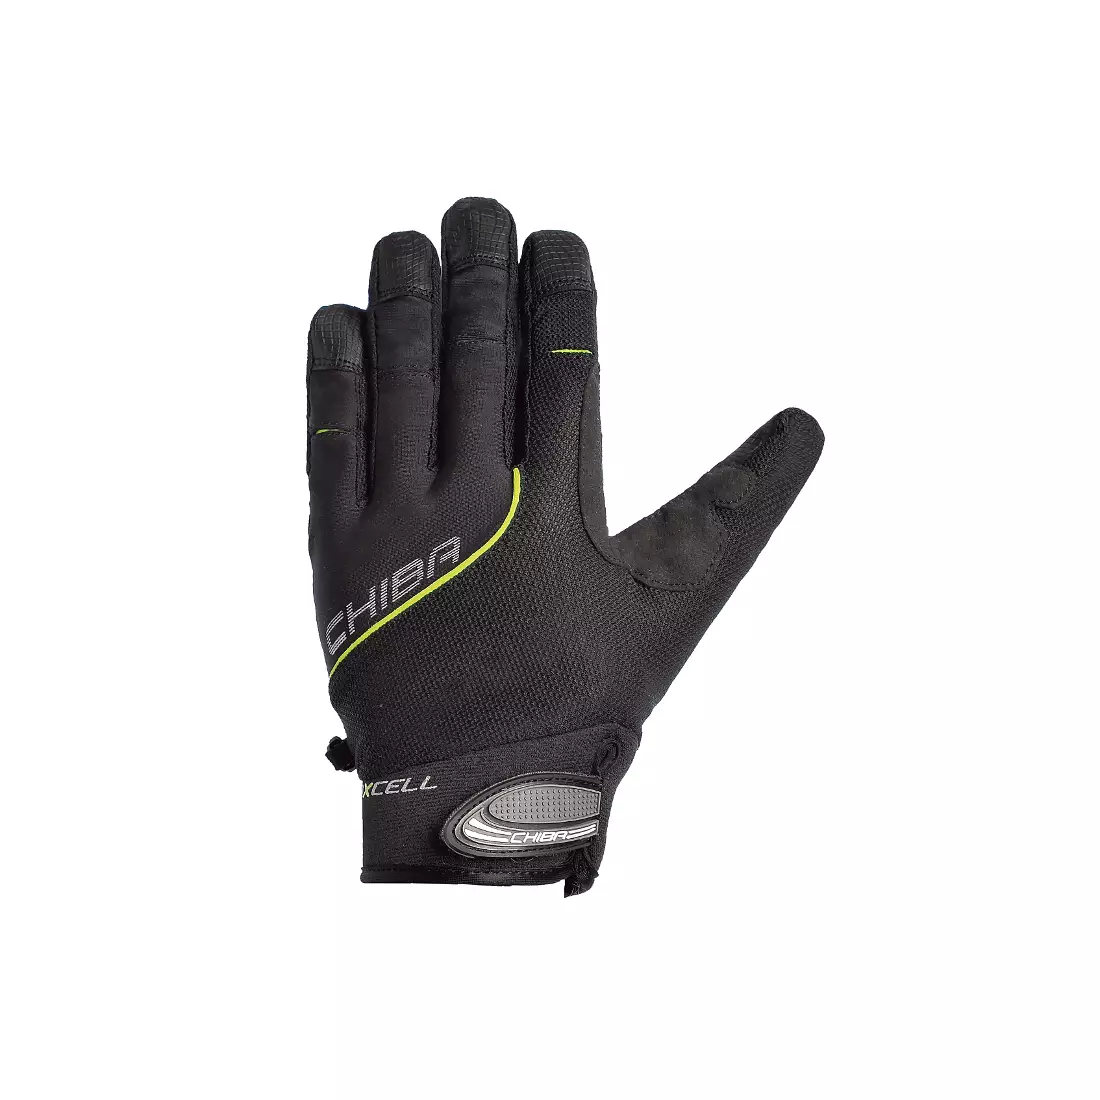 CHIBA BIOXCELL TOURING cycling gloves, black